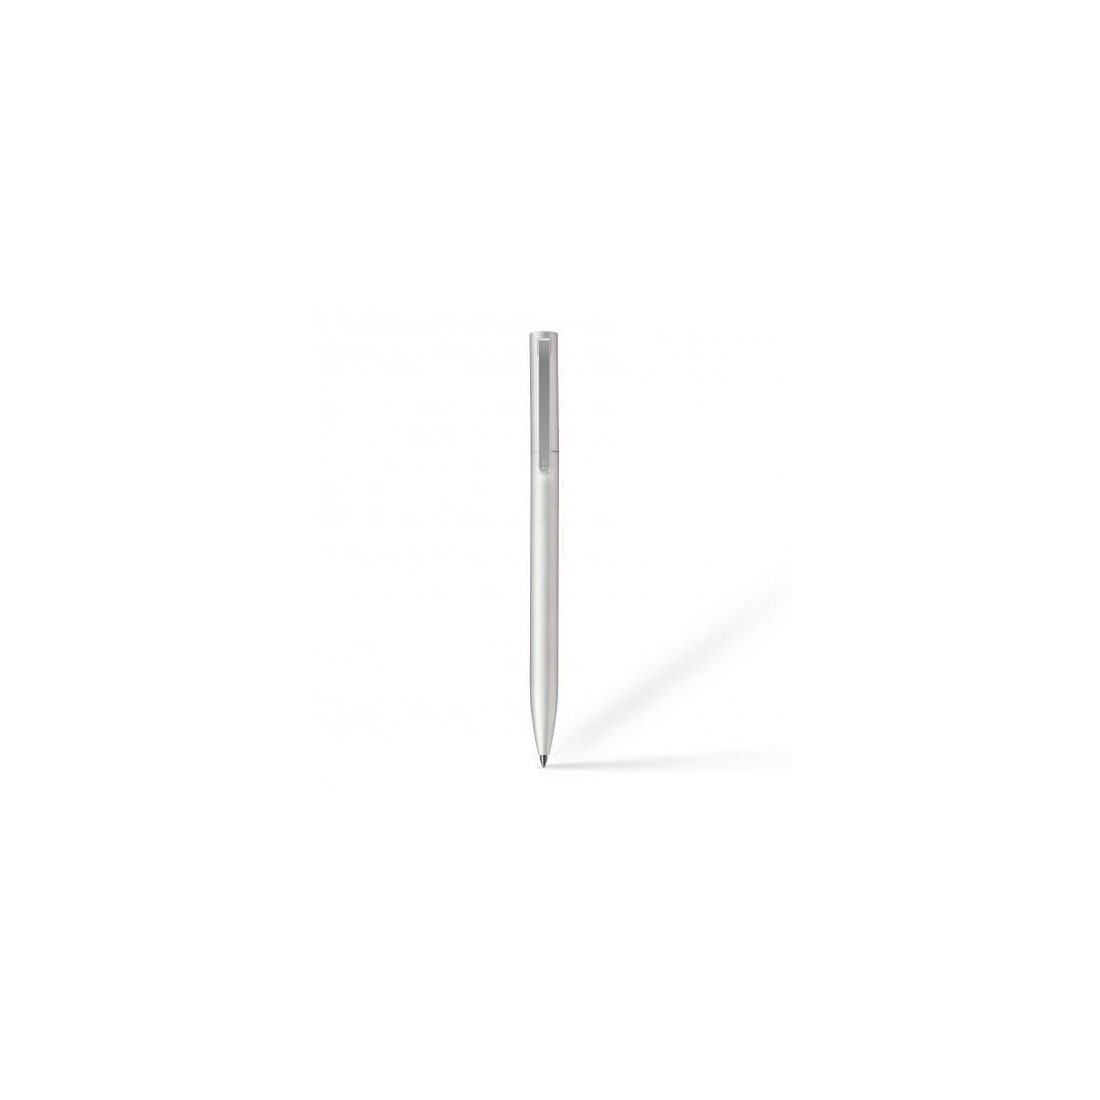 Xiaomi Mijia 9.5mm Aluminum Rollerball Pen, Silver